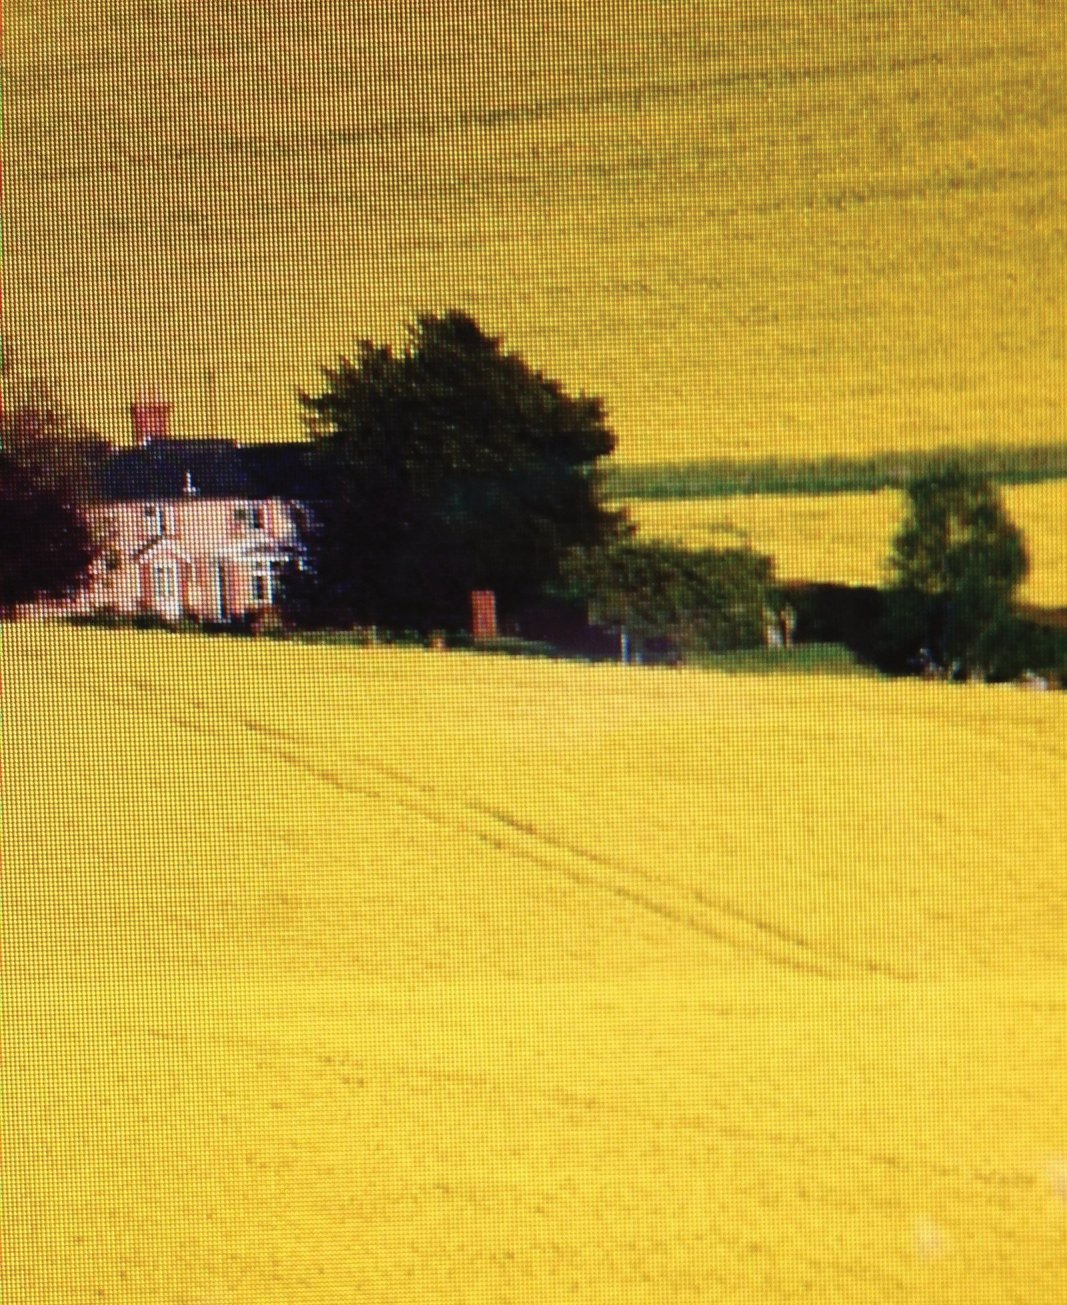 Vast fields of Yellow